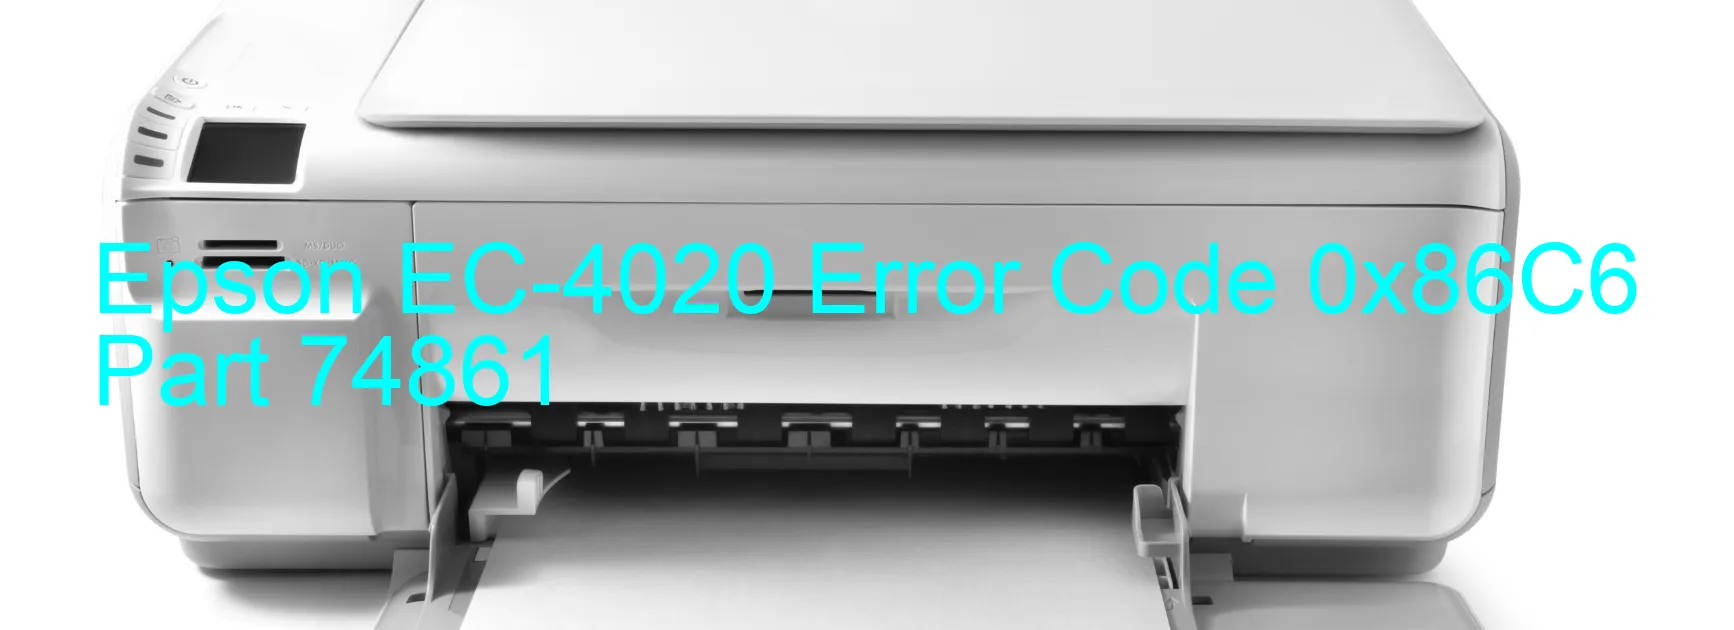 Epson EC-4020 Error 0x86C6 